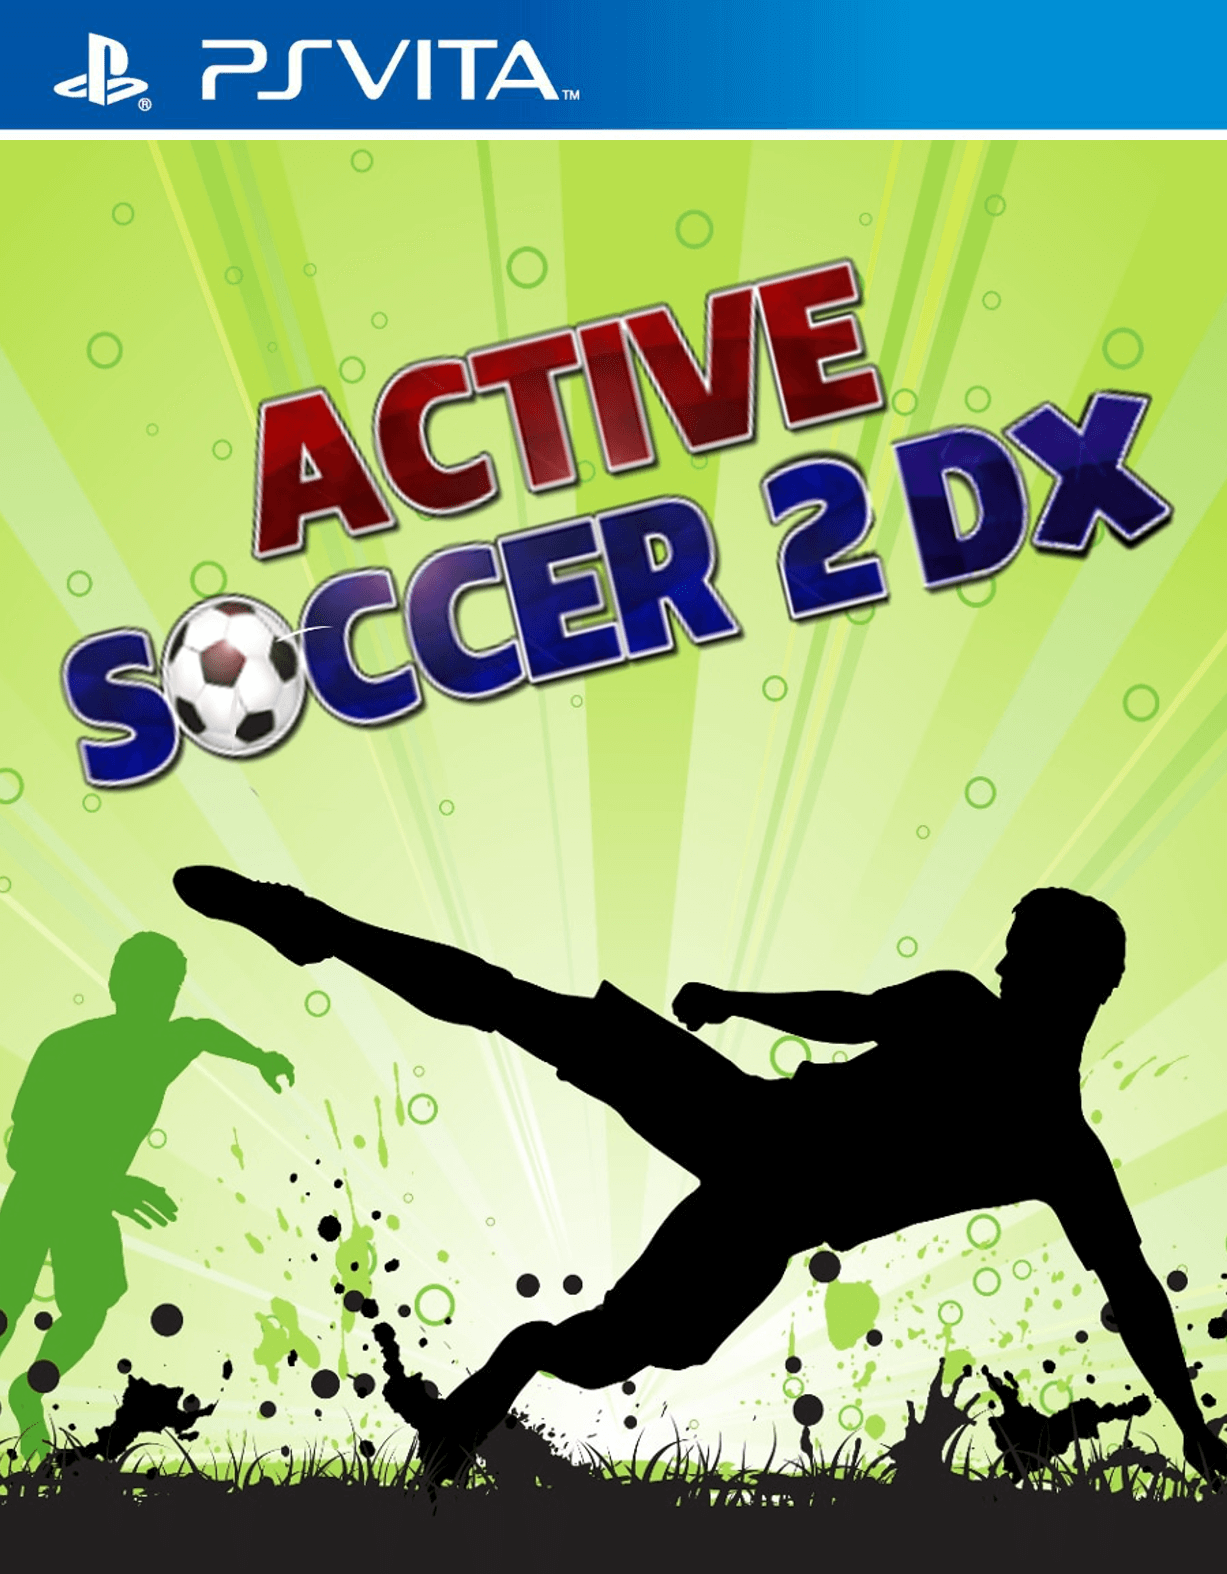 Active Soccer 2 DX